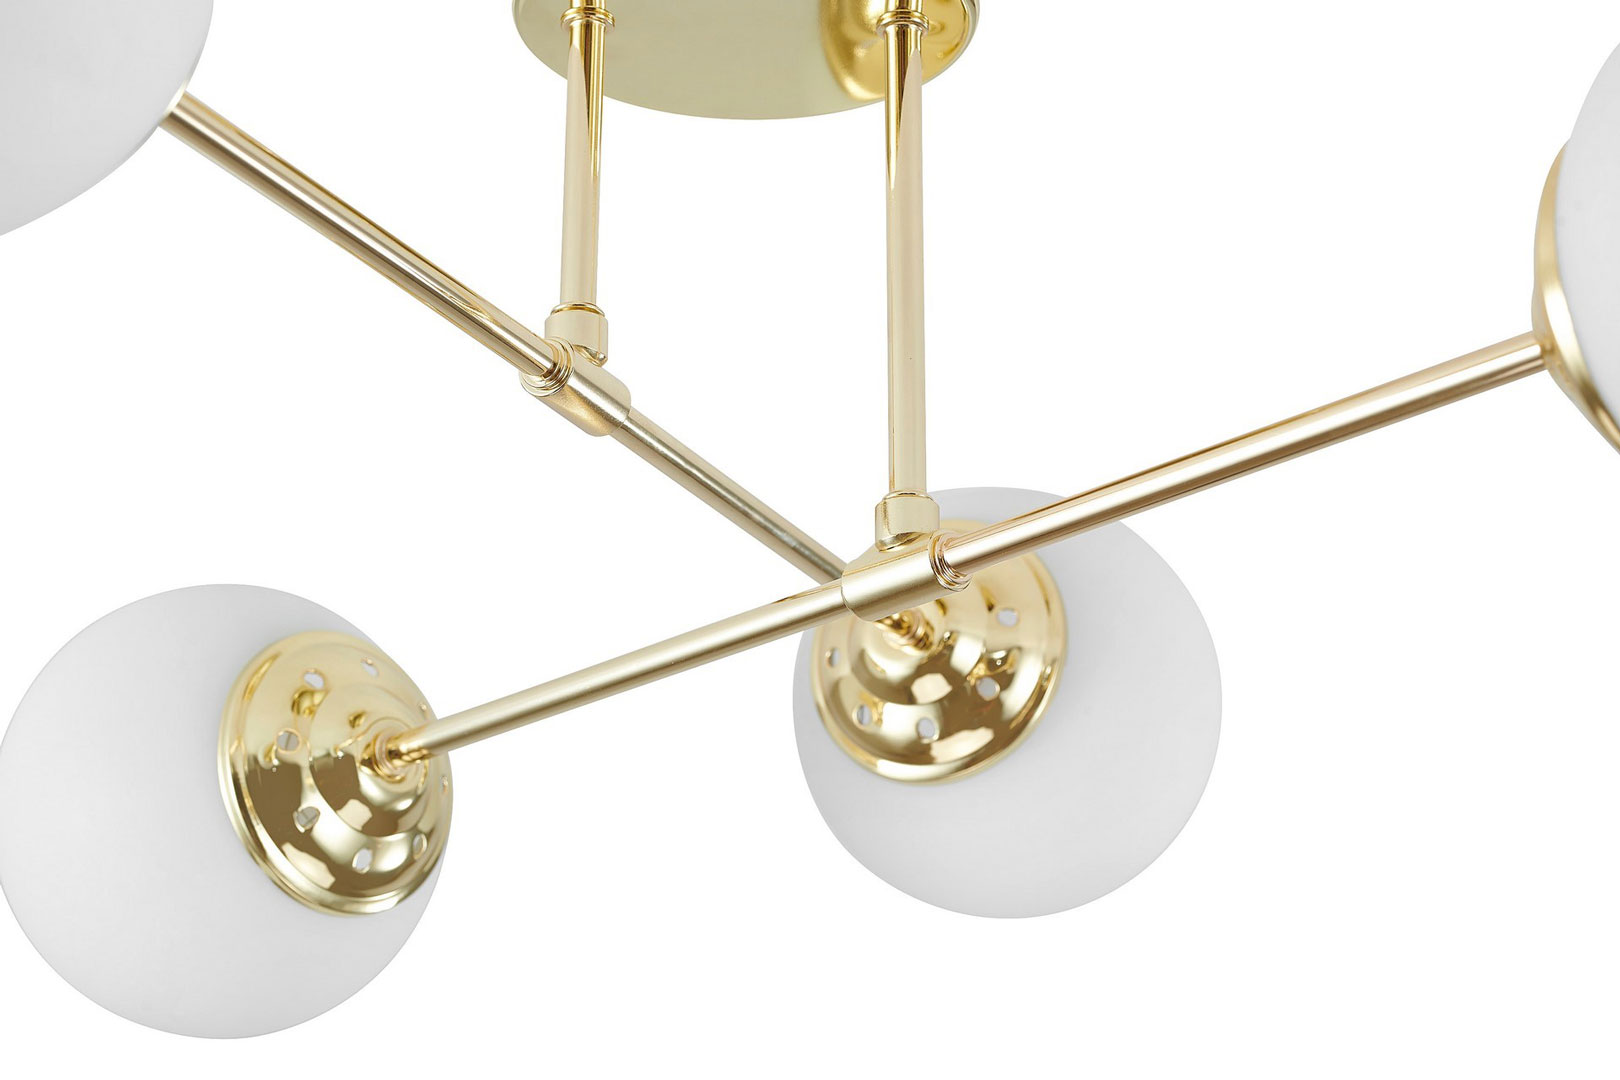 Gold ceiling lamp, asymmetrical shape, metal tubes, white balls, classic gold - FINO - Lampit image 3